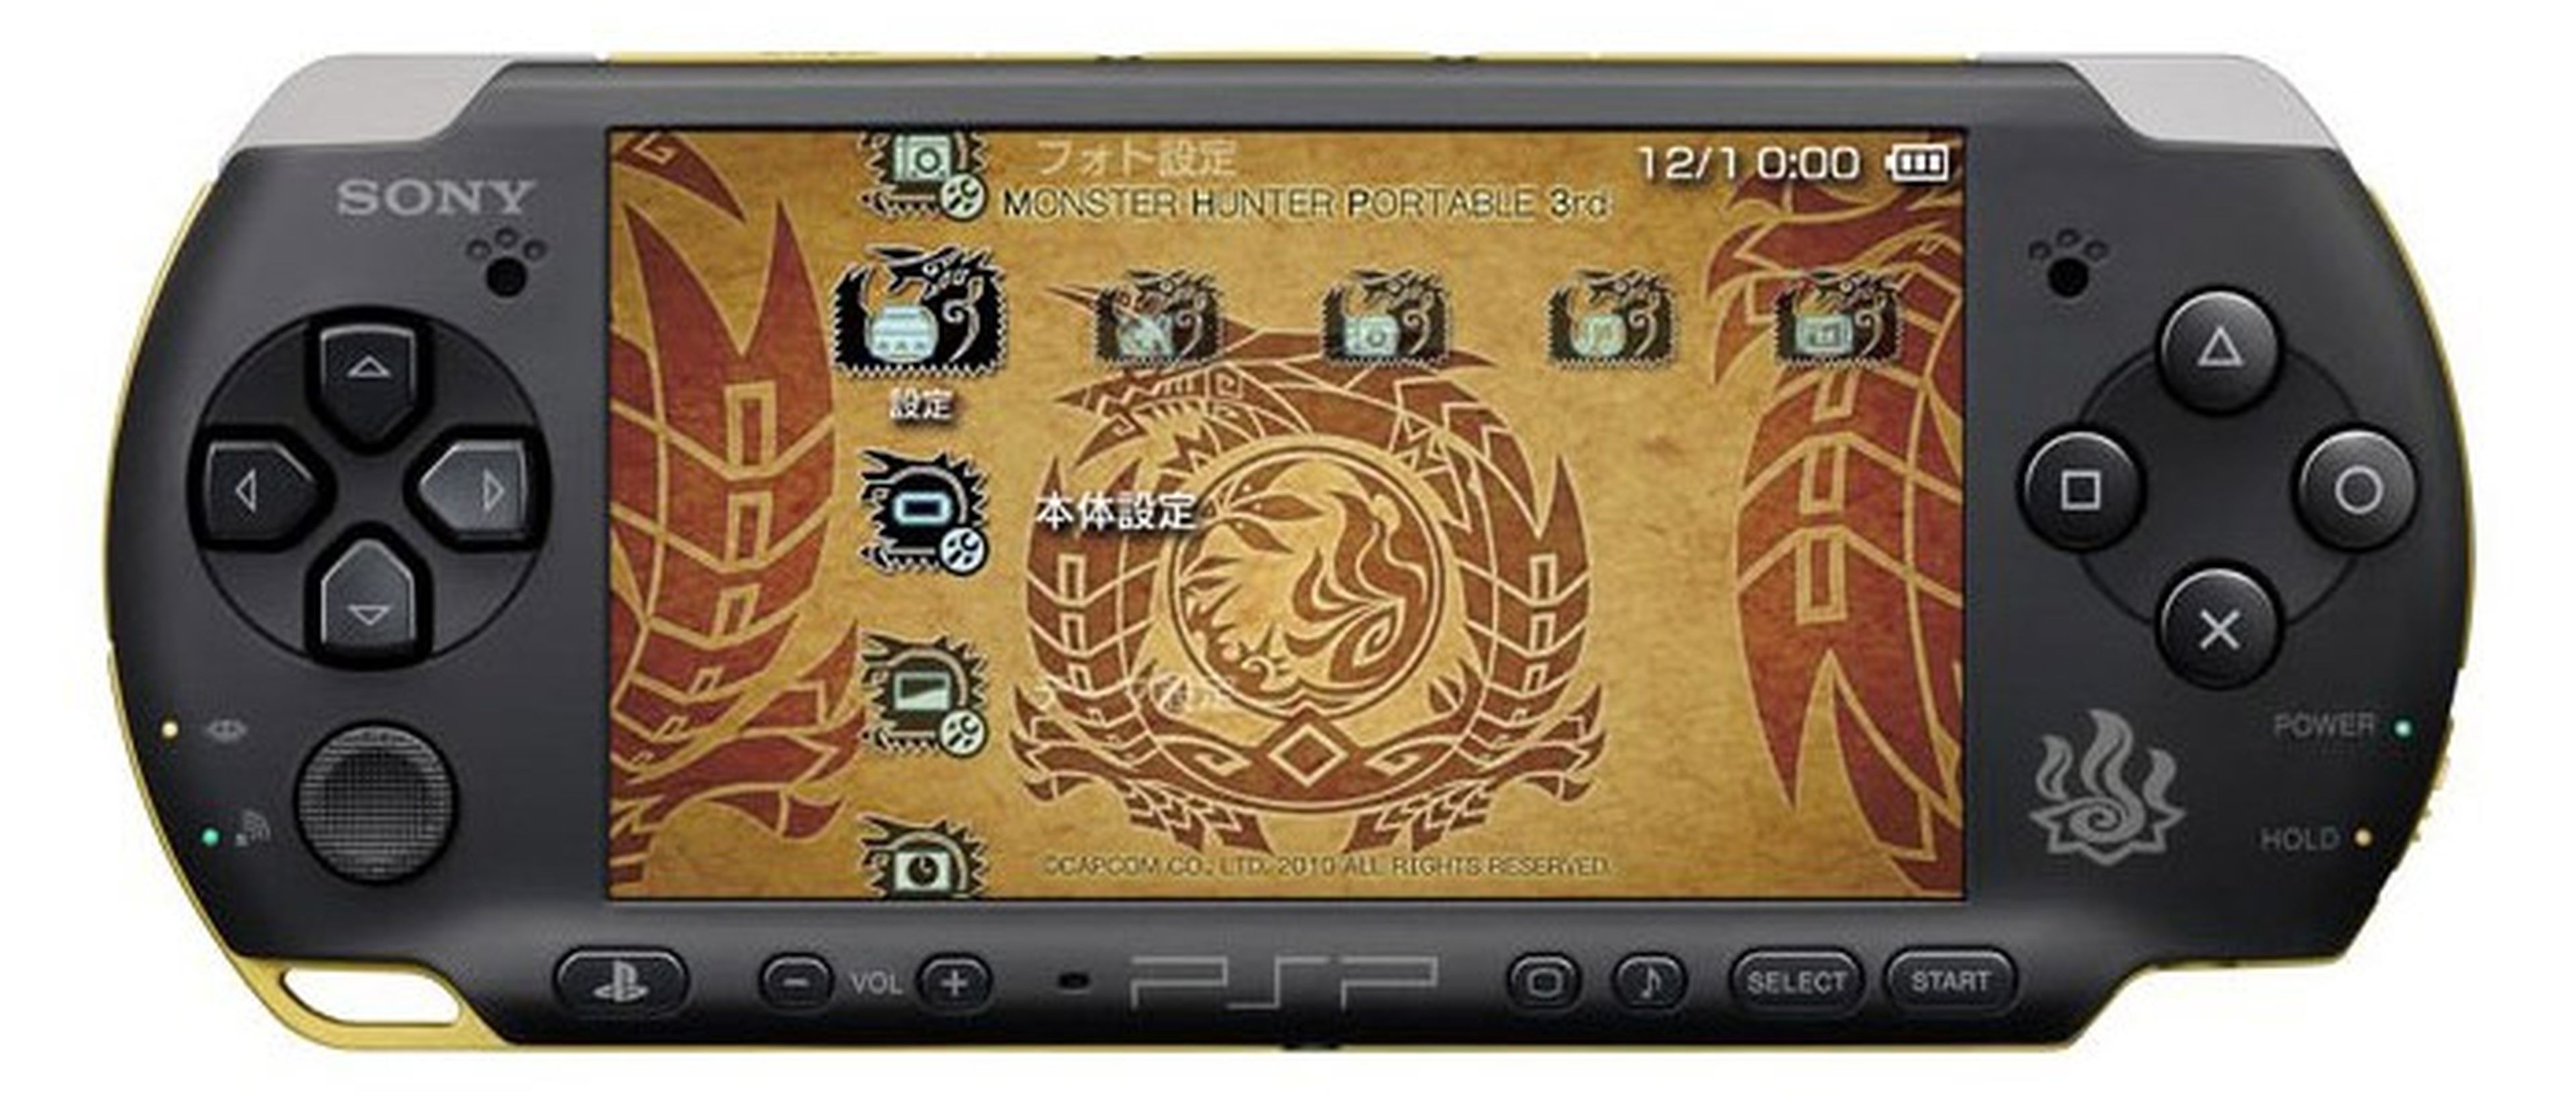 Nueva PSP edición Monster Hunter